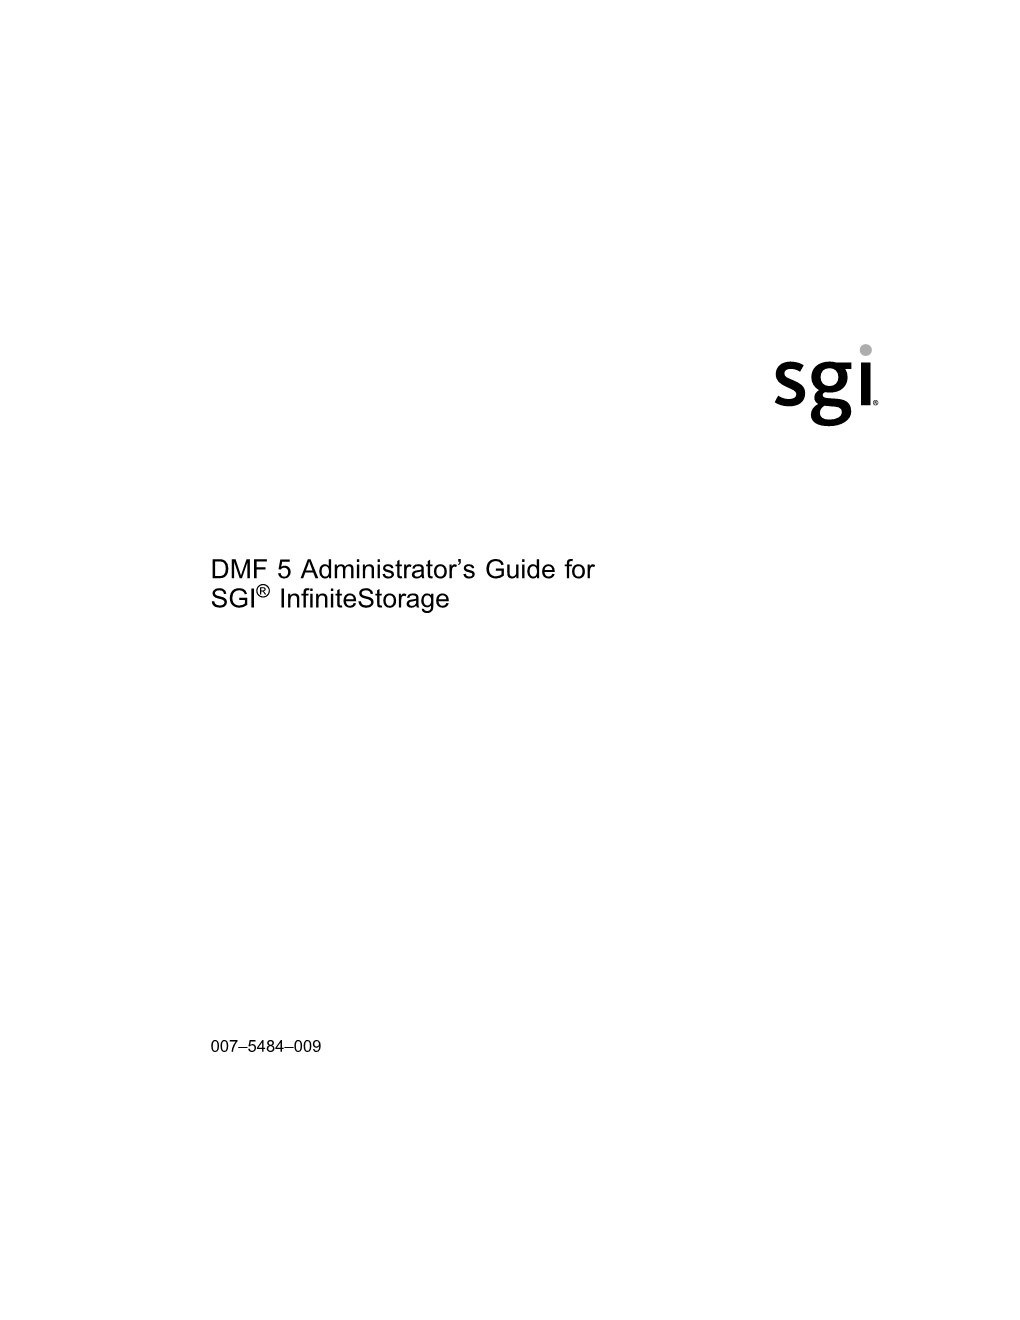 DMF 5 Administrator's Guide for SGI® Infinitestorage